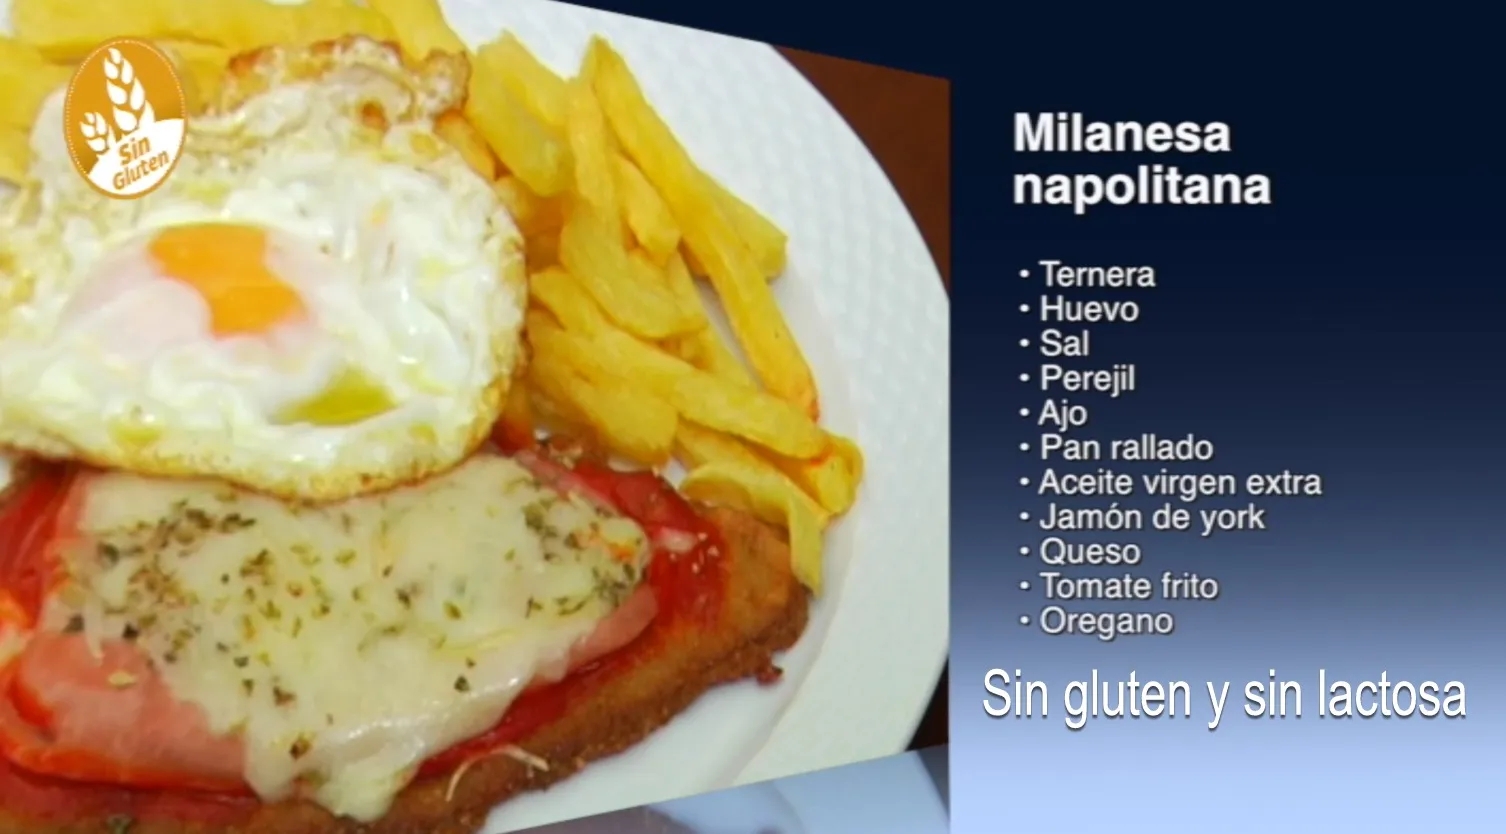 Receta de Milanesa napolitana sin gluten, como se hace